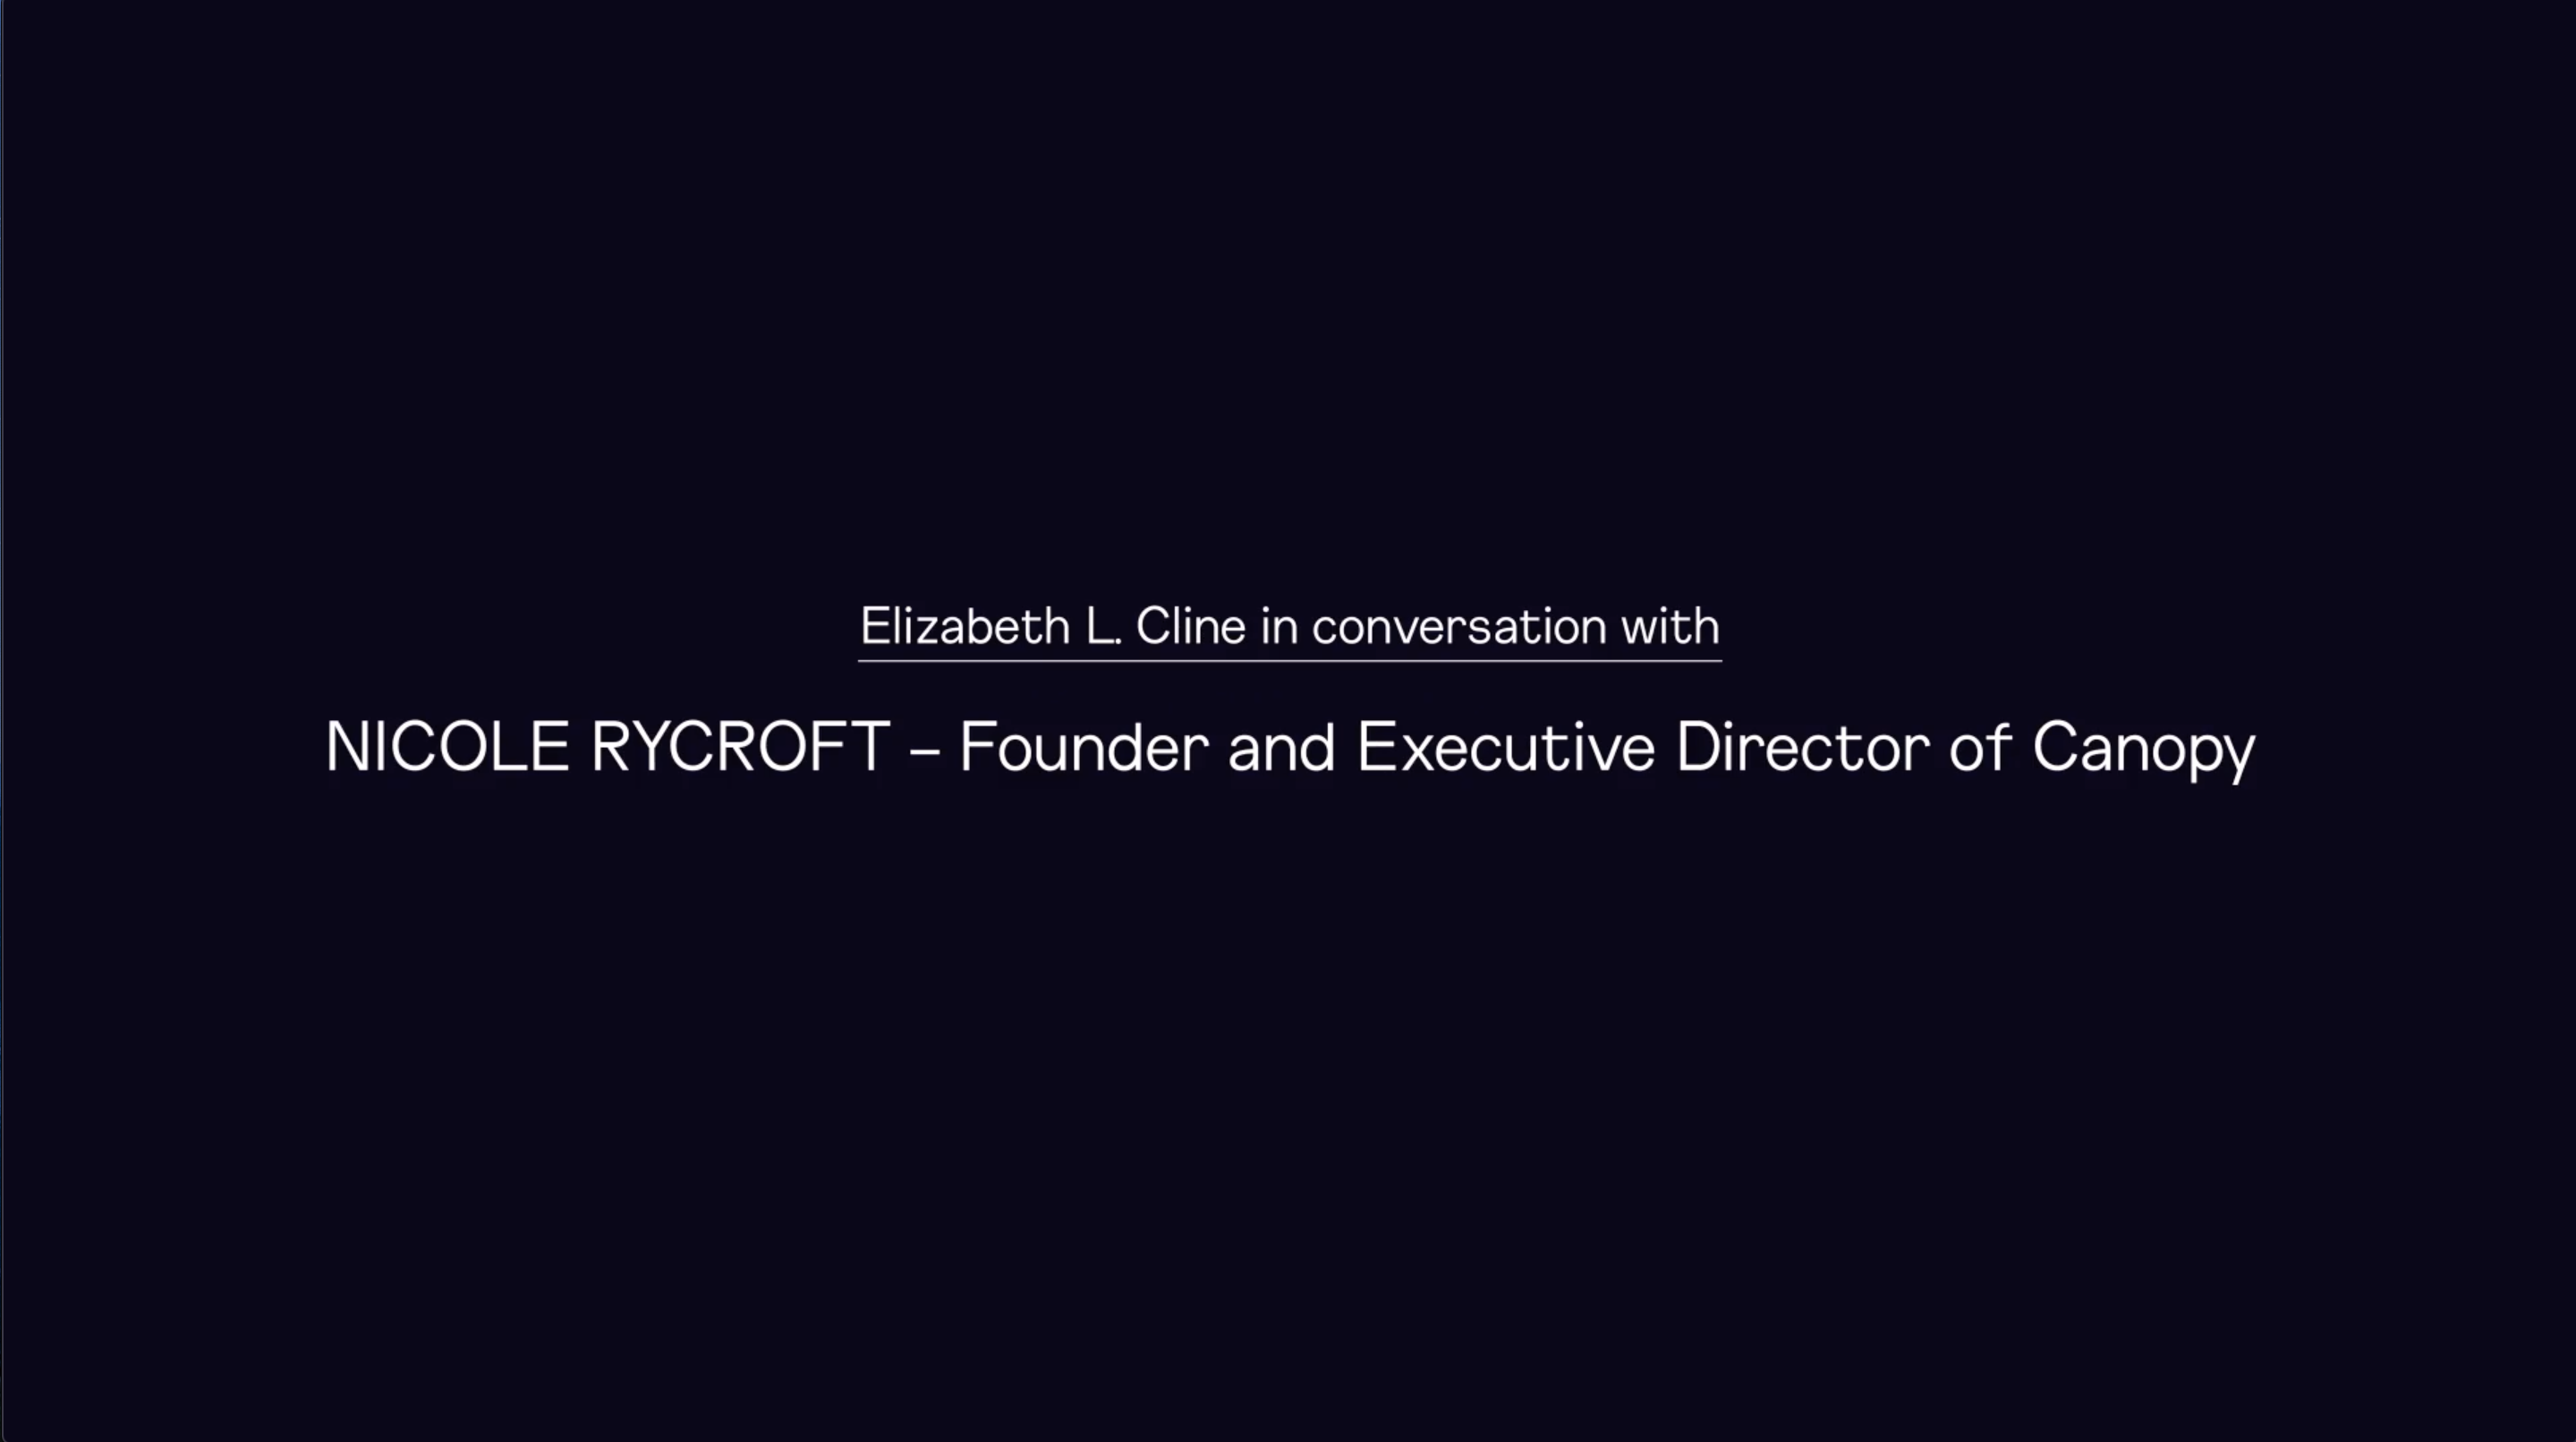 Elizabeth L. Cline in conversation with Nicole Rycroft